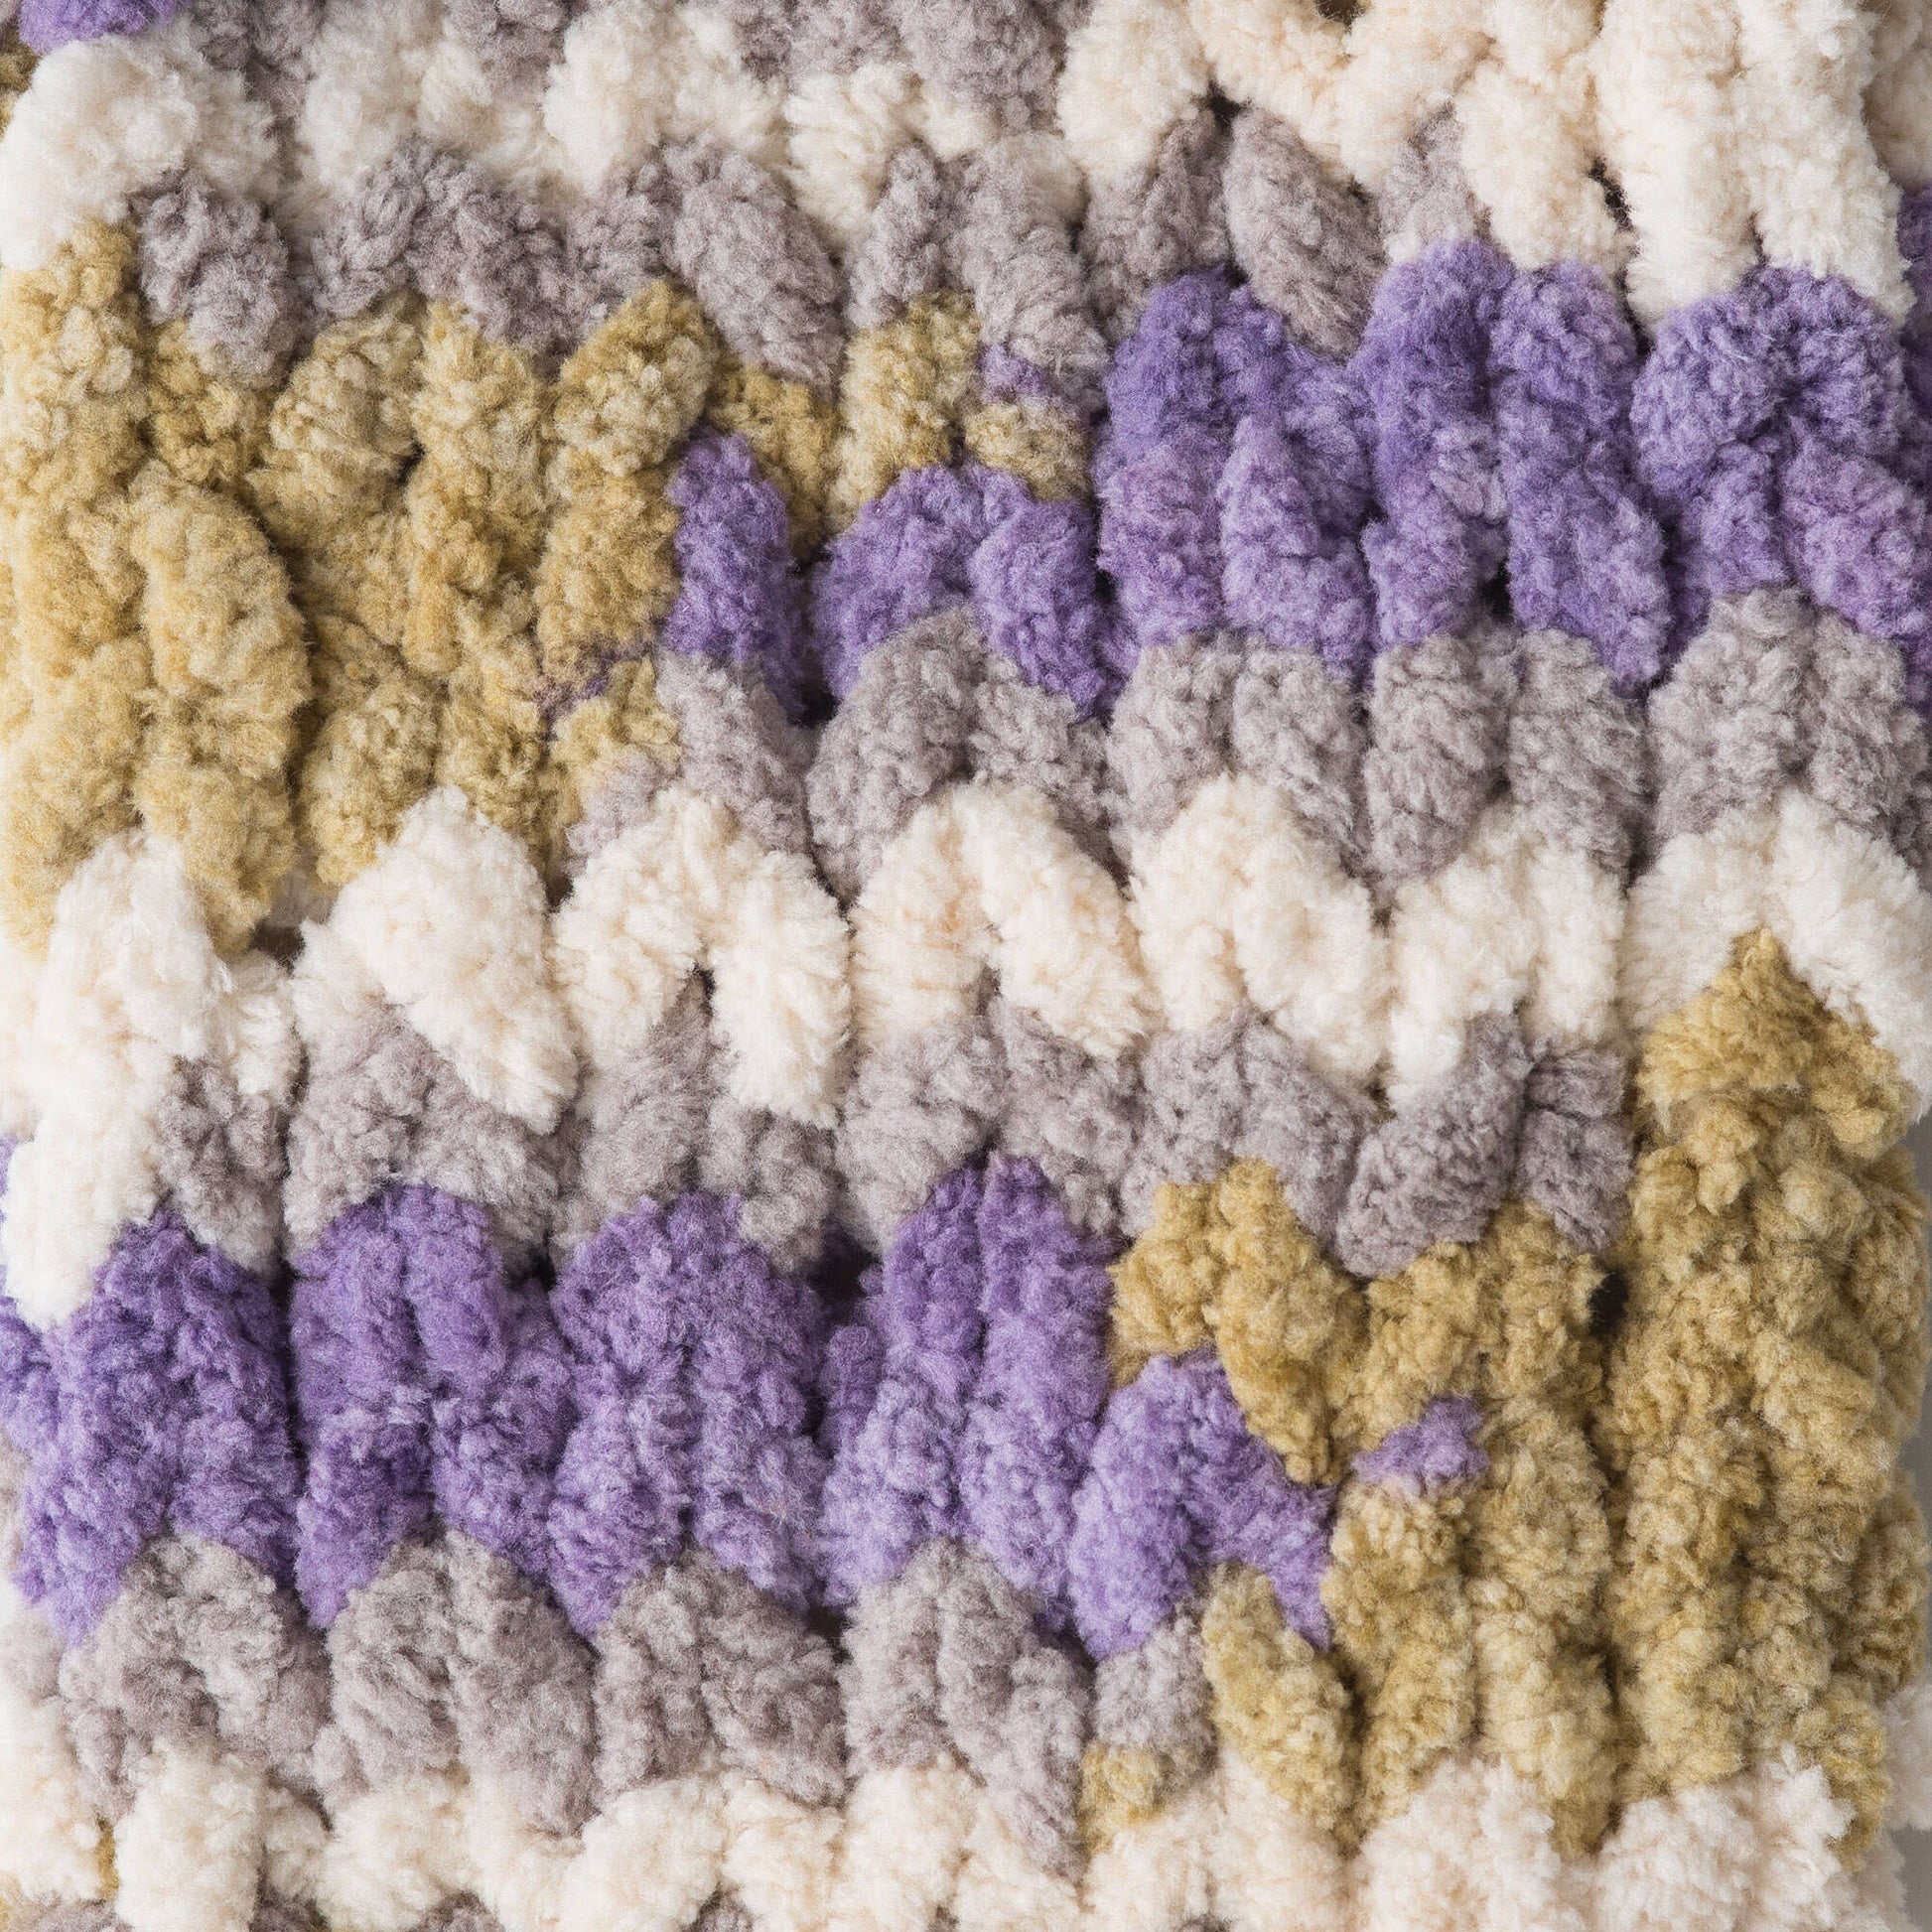 Bernat Blanket Yarn (300g/10.5oz) Lilac Bush